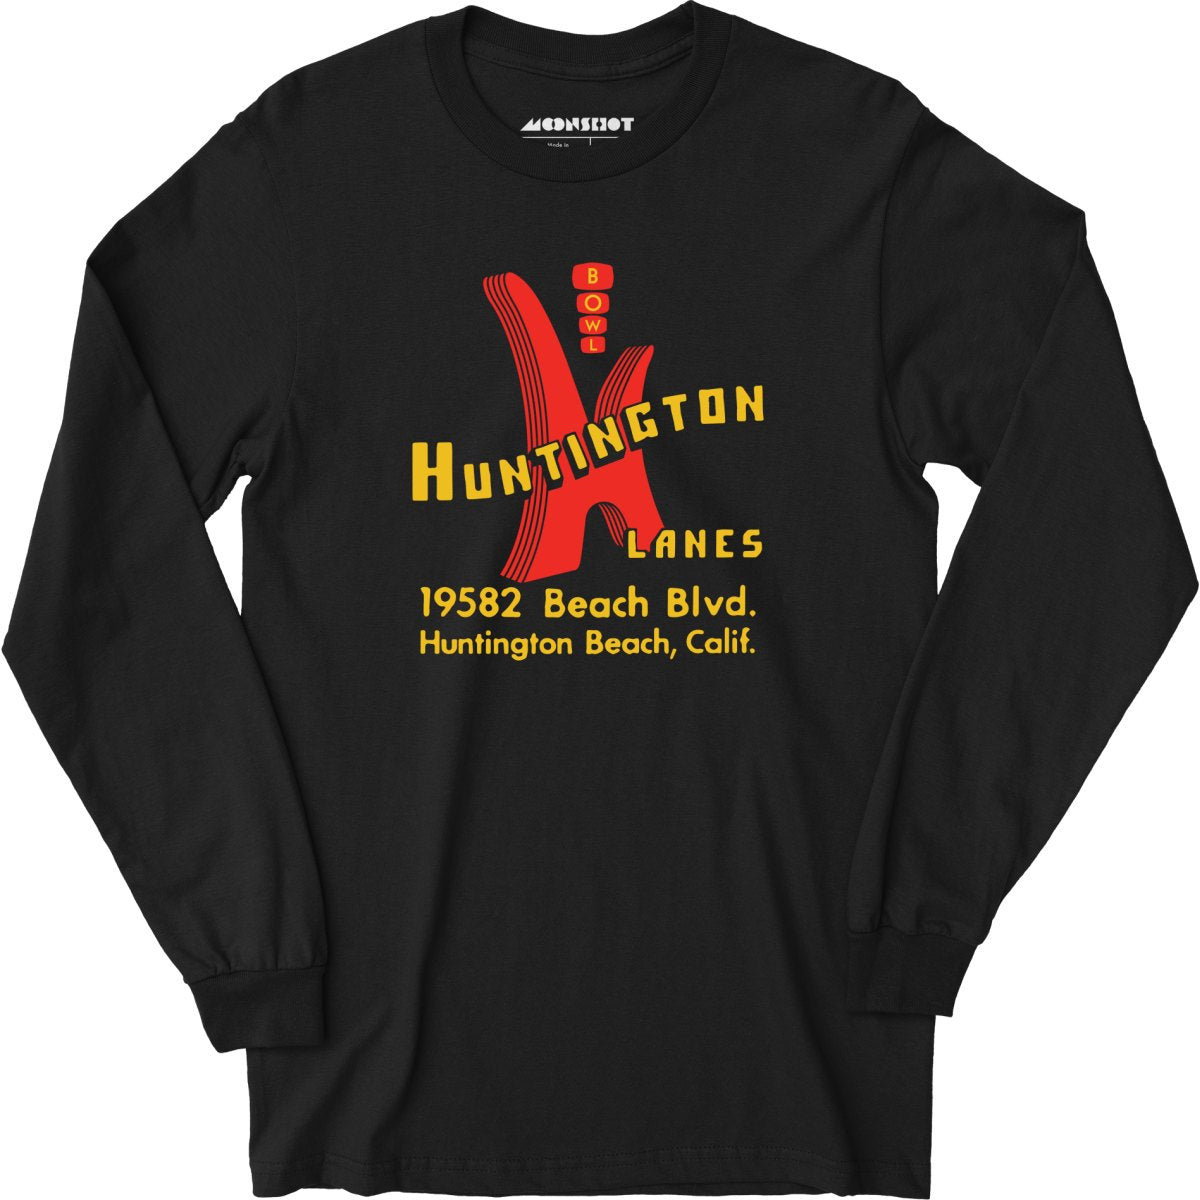 Huntington Lanes - Huntington Beach, CA - Vintage Bowling Alley - Long Sleeve T-Shirt